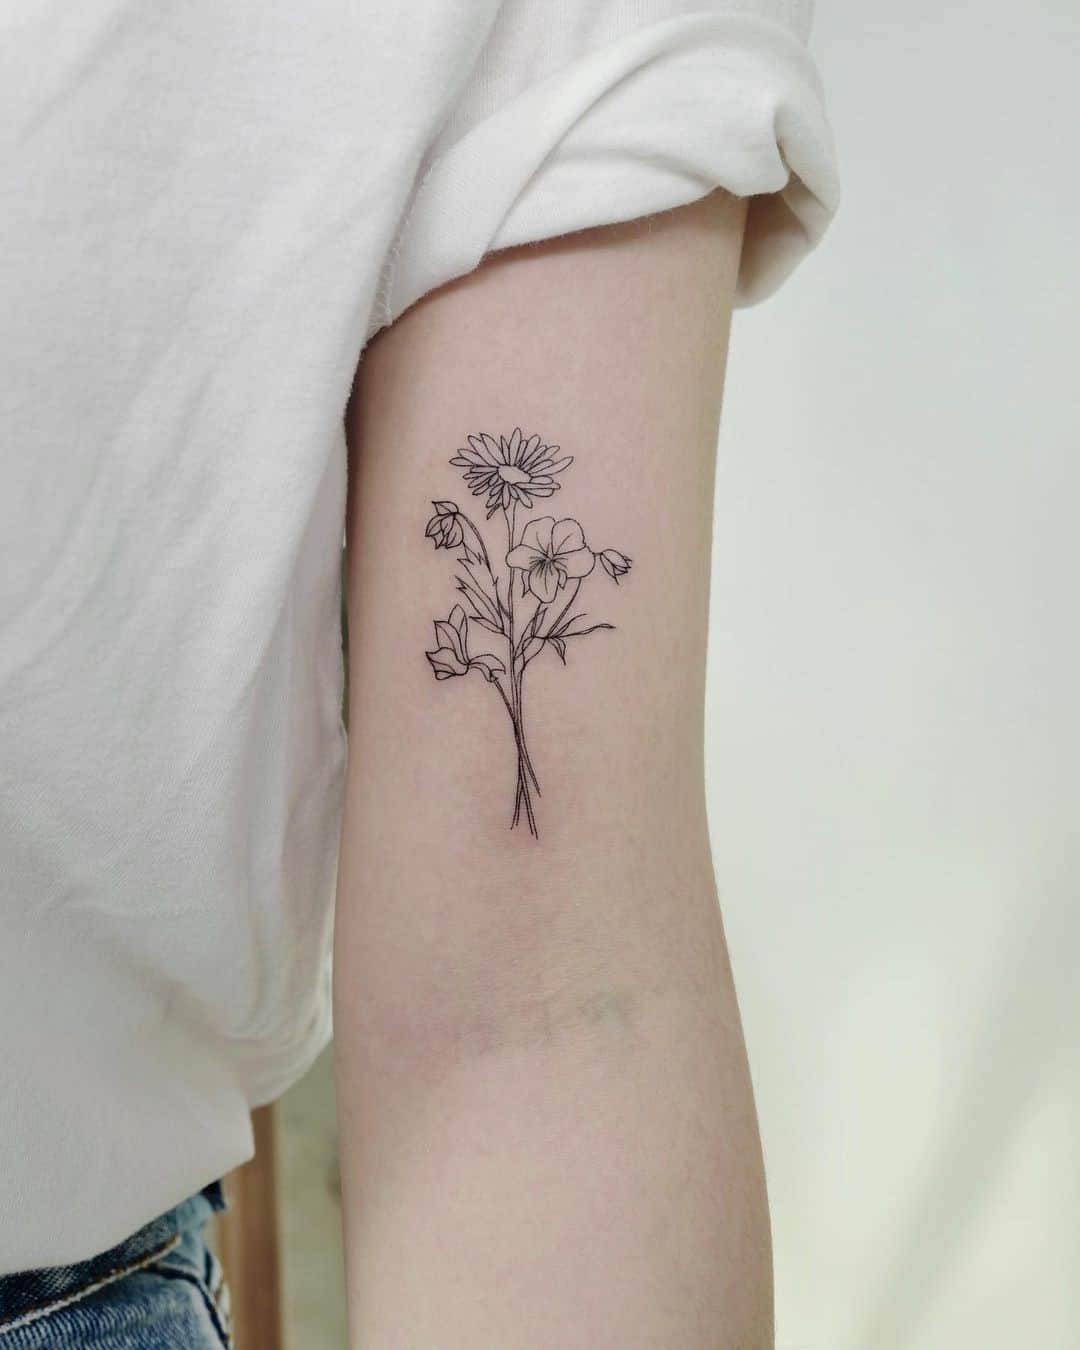 Tatuaje de flor de aster de idea de tinta negra pequeña 